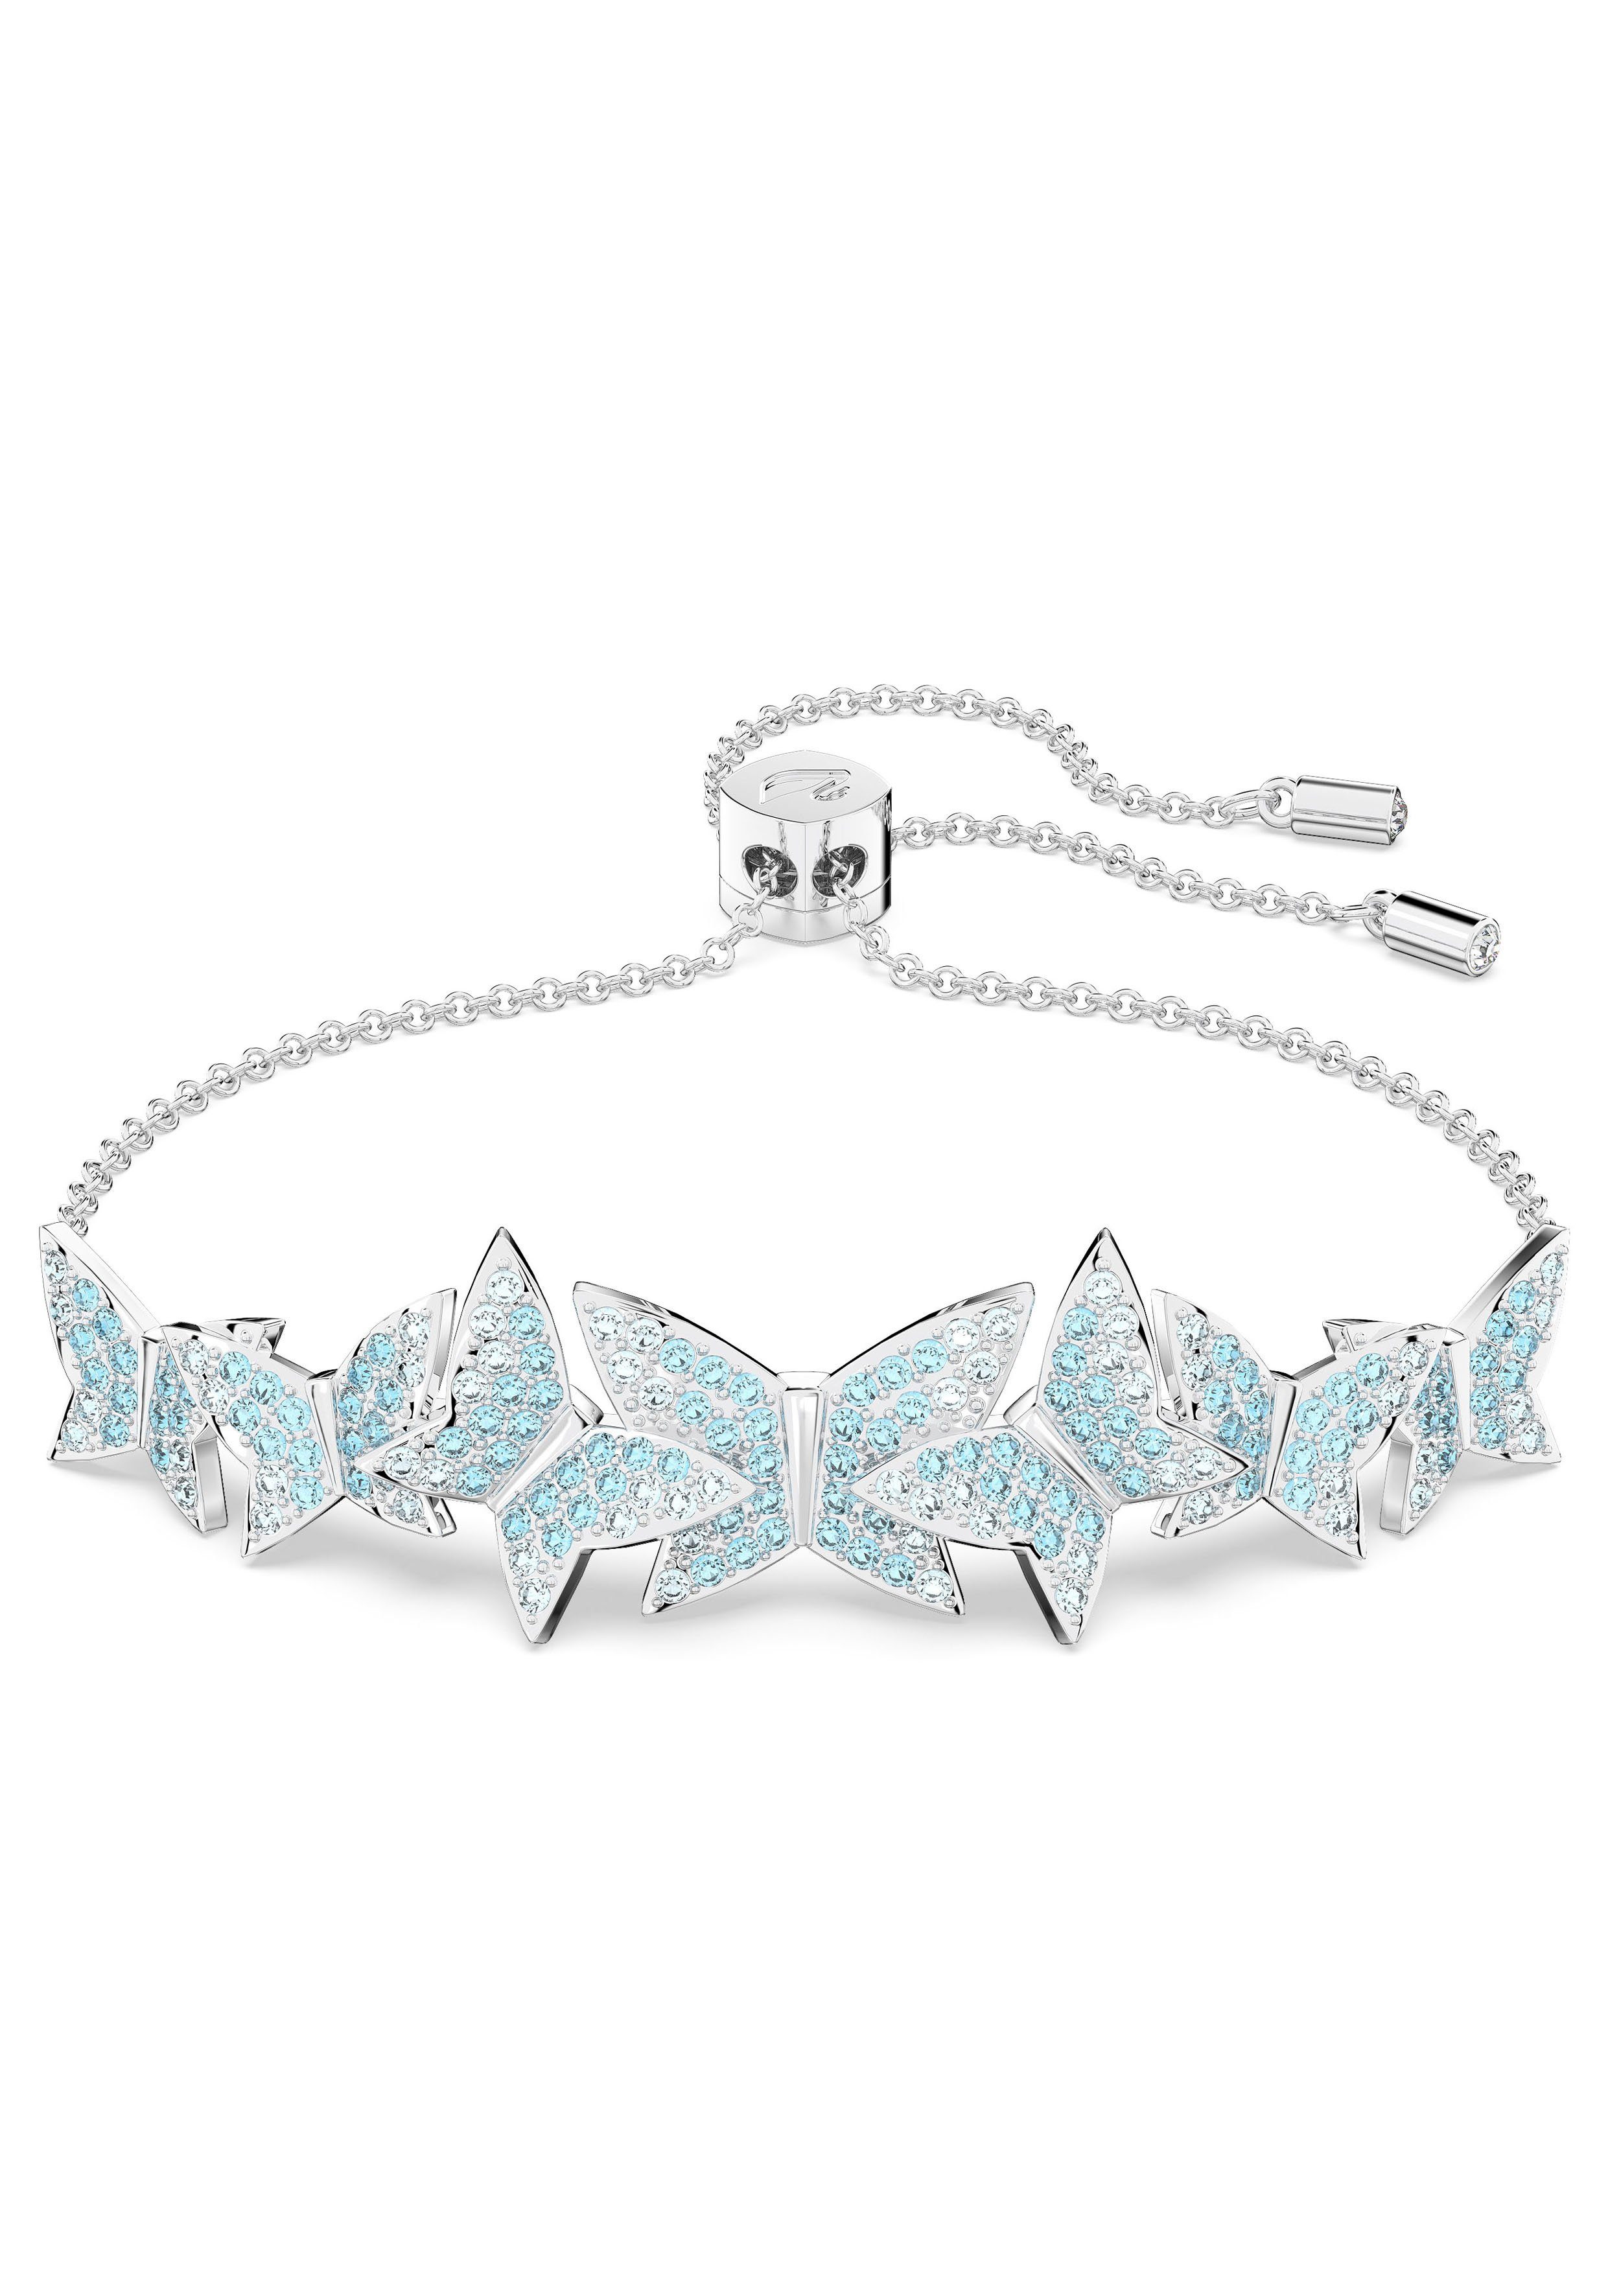 Swarovski Armband Lilia, Schmetterling, 5662184, mit Swarovski® Kristall